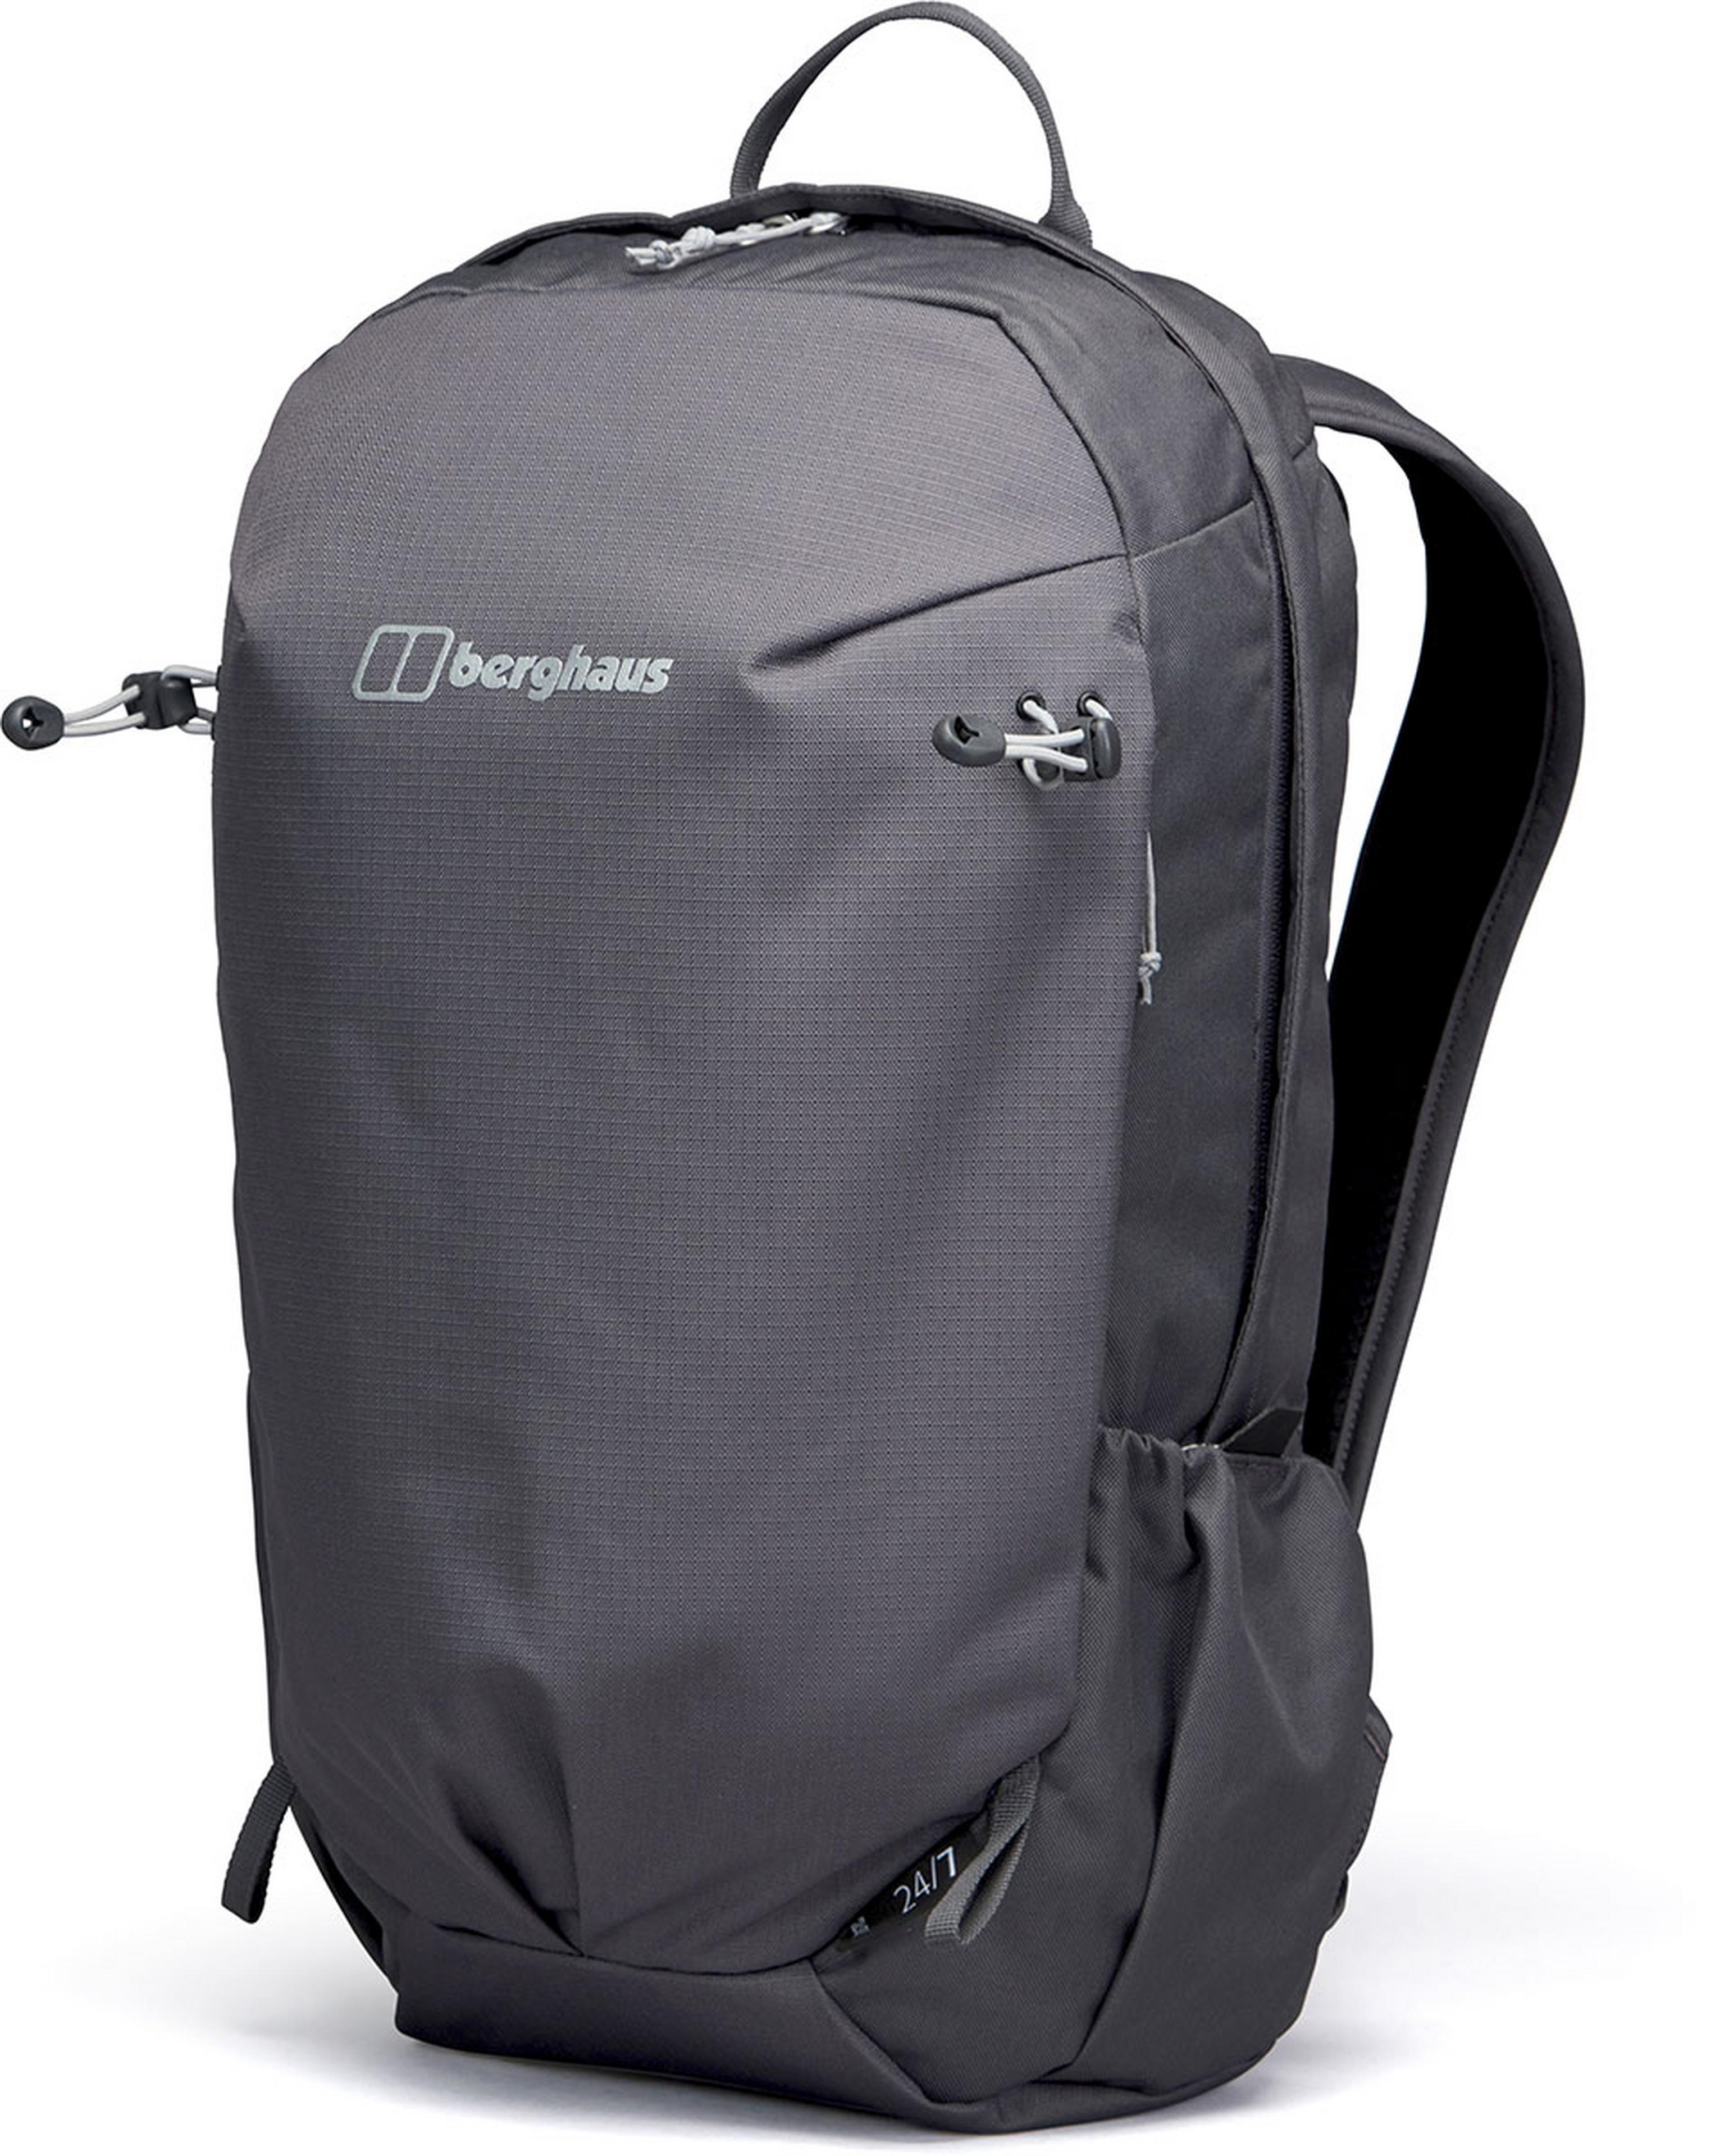 Berghaus 24/7 25L Backpack